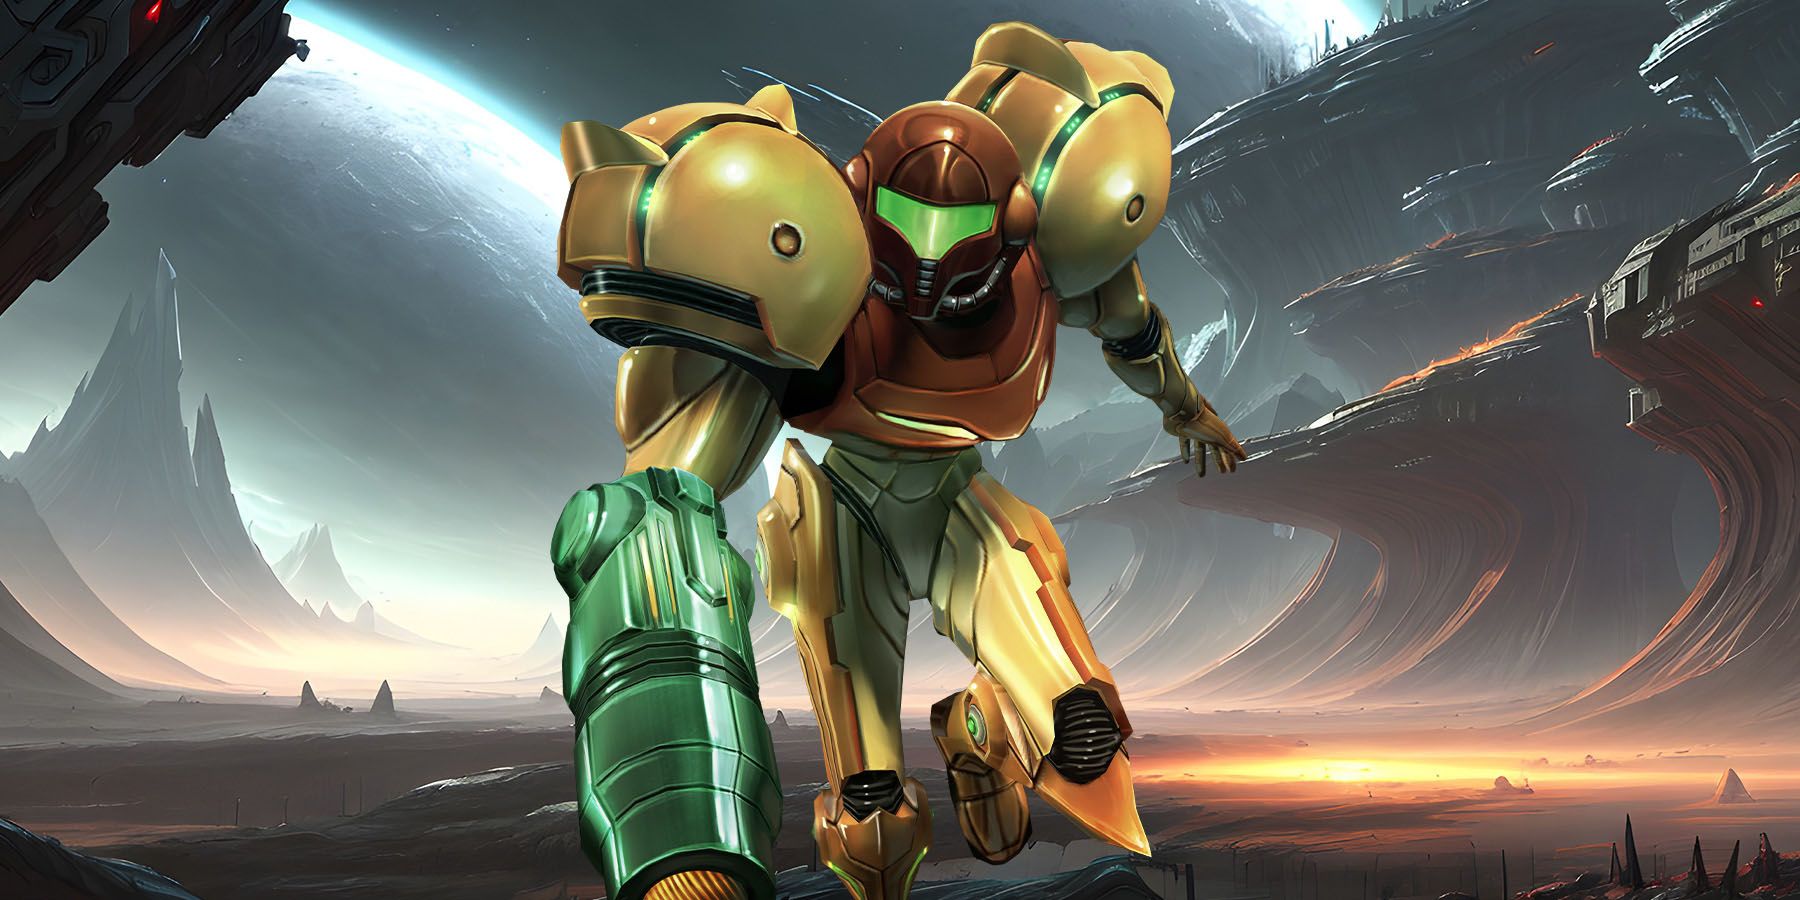 A promotional image of Samus Aran from Metroid Prime.